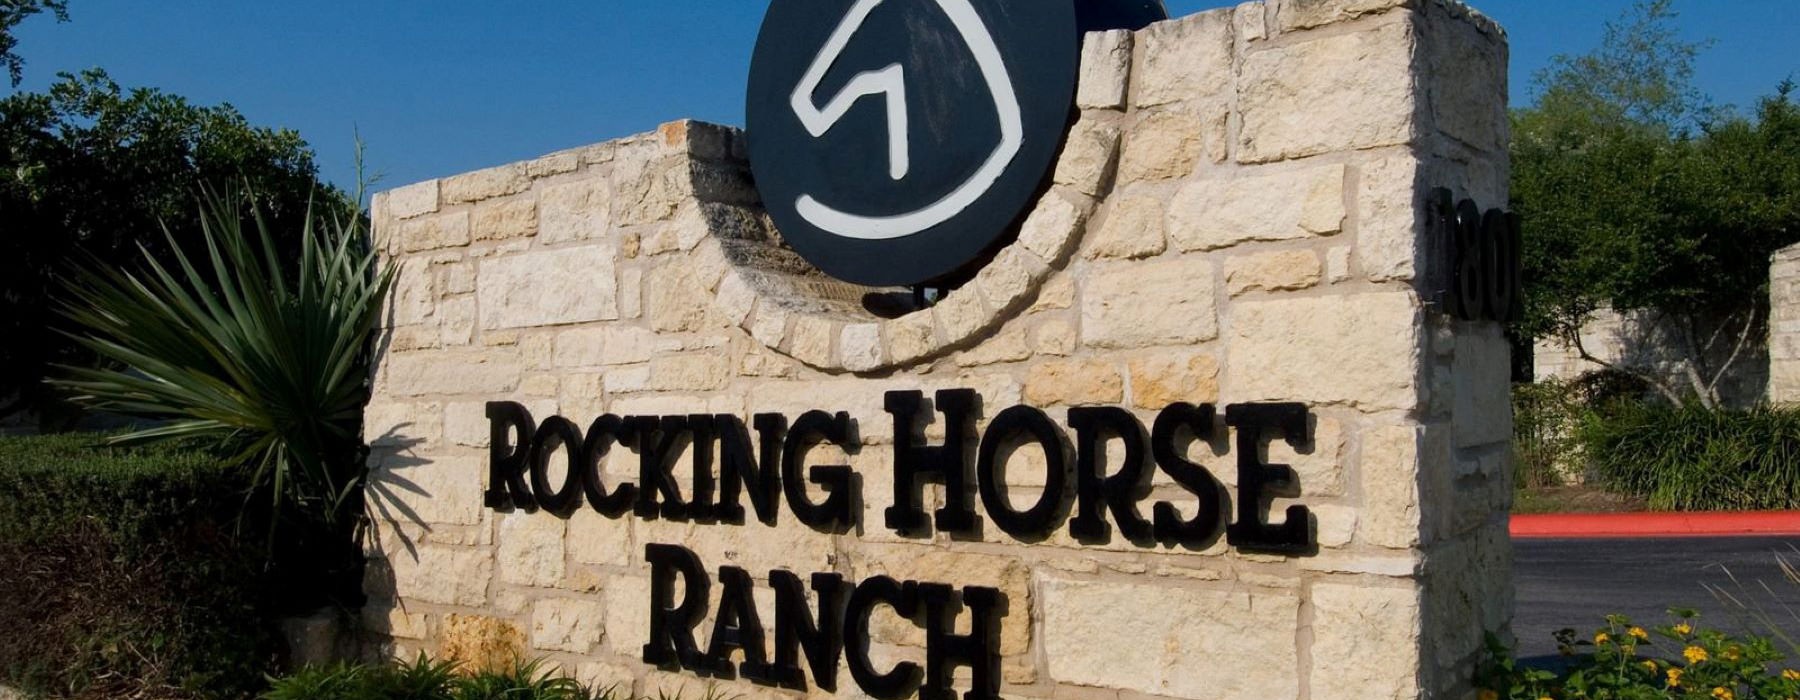 Large, Stone Rocking Horse Ranch Entrance sign